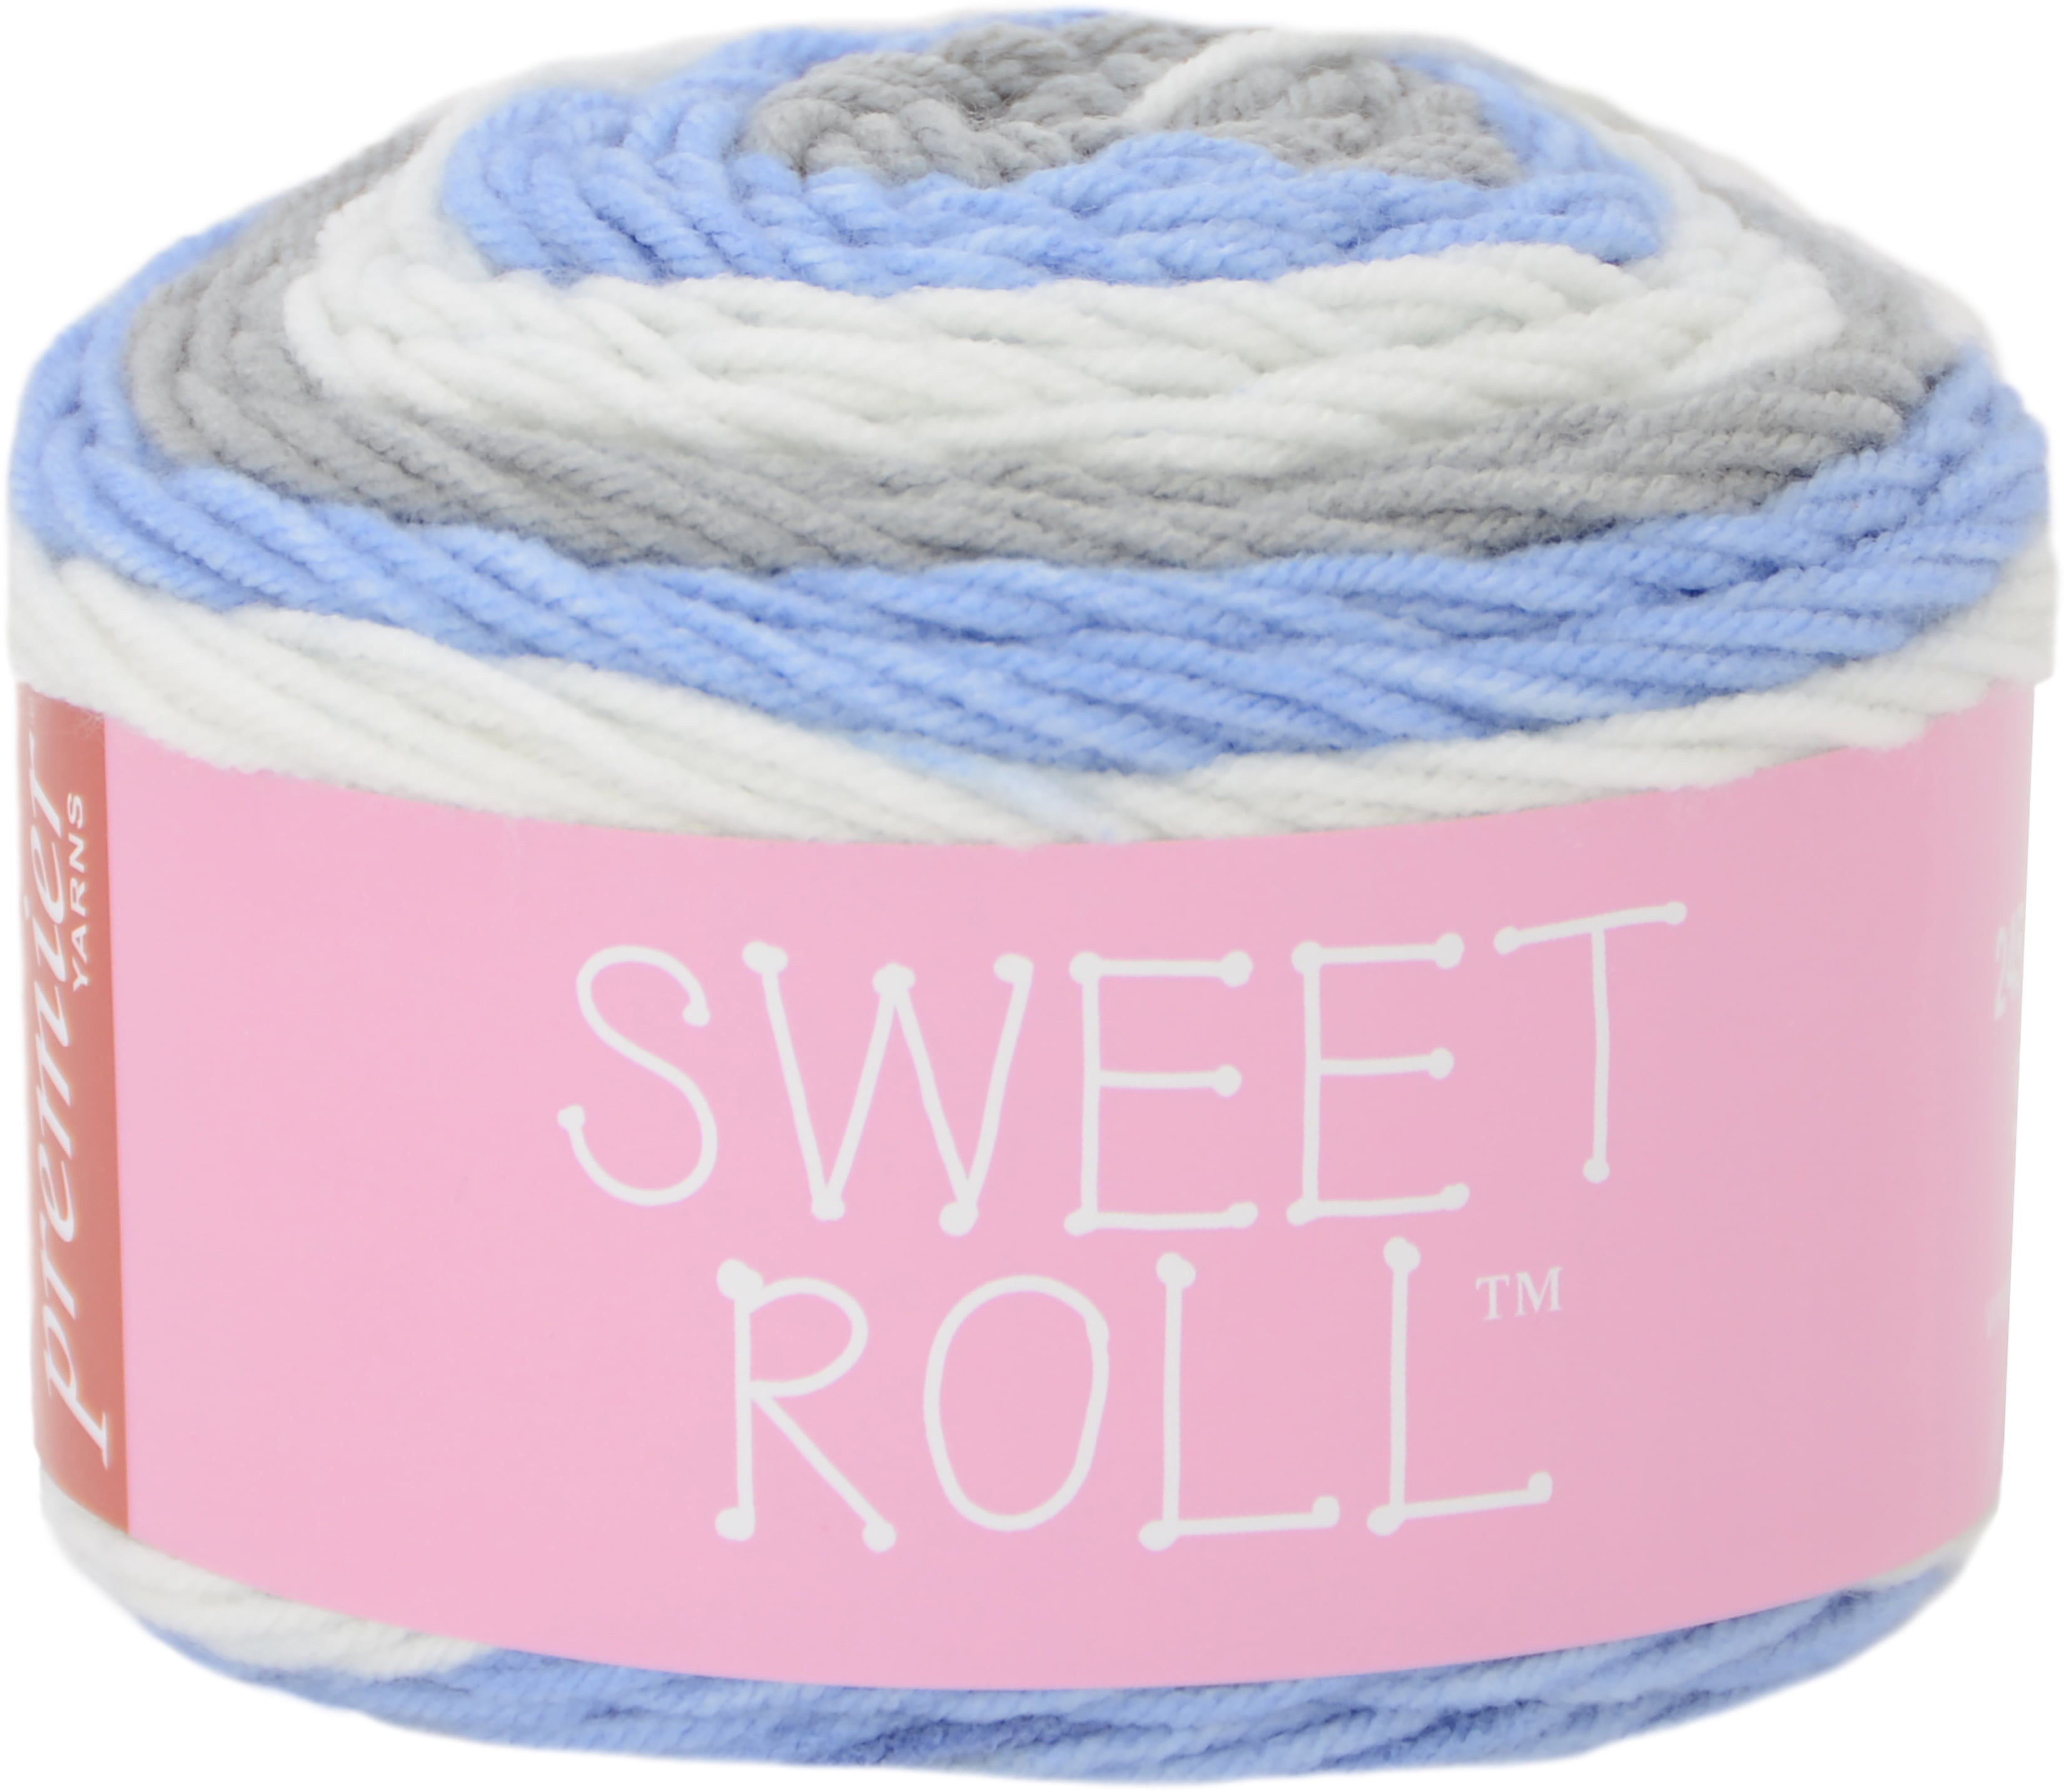 Caron Cinnamon Swirl Cakes Yarn SWEETS for sale online